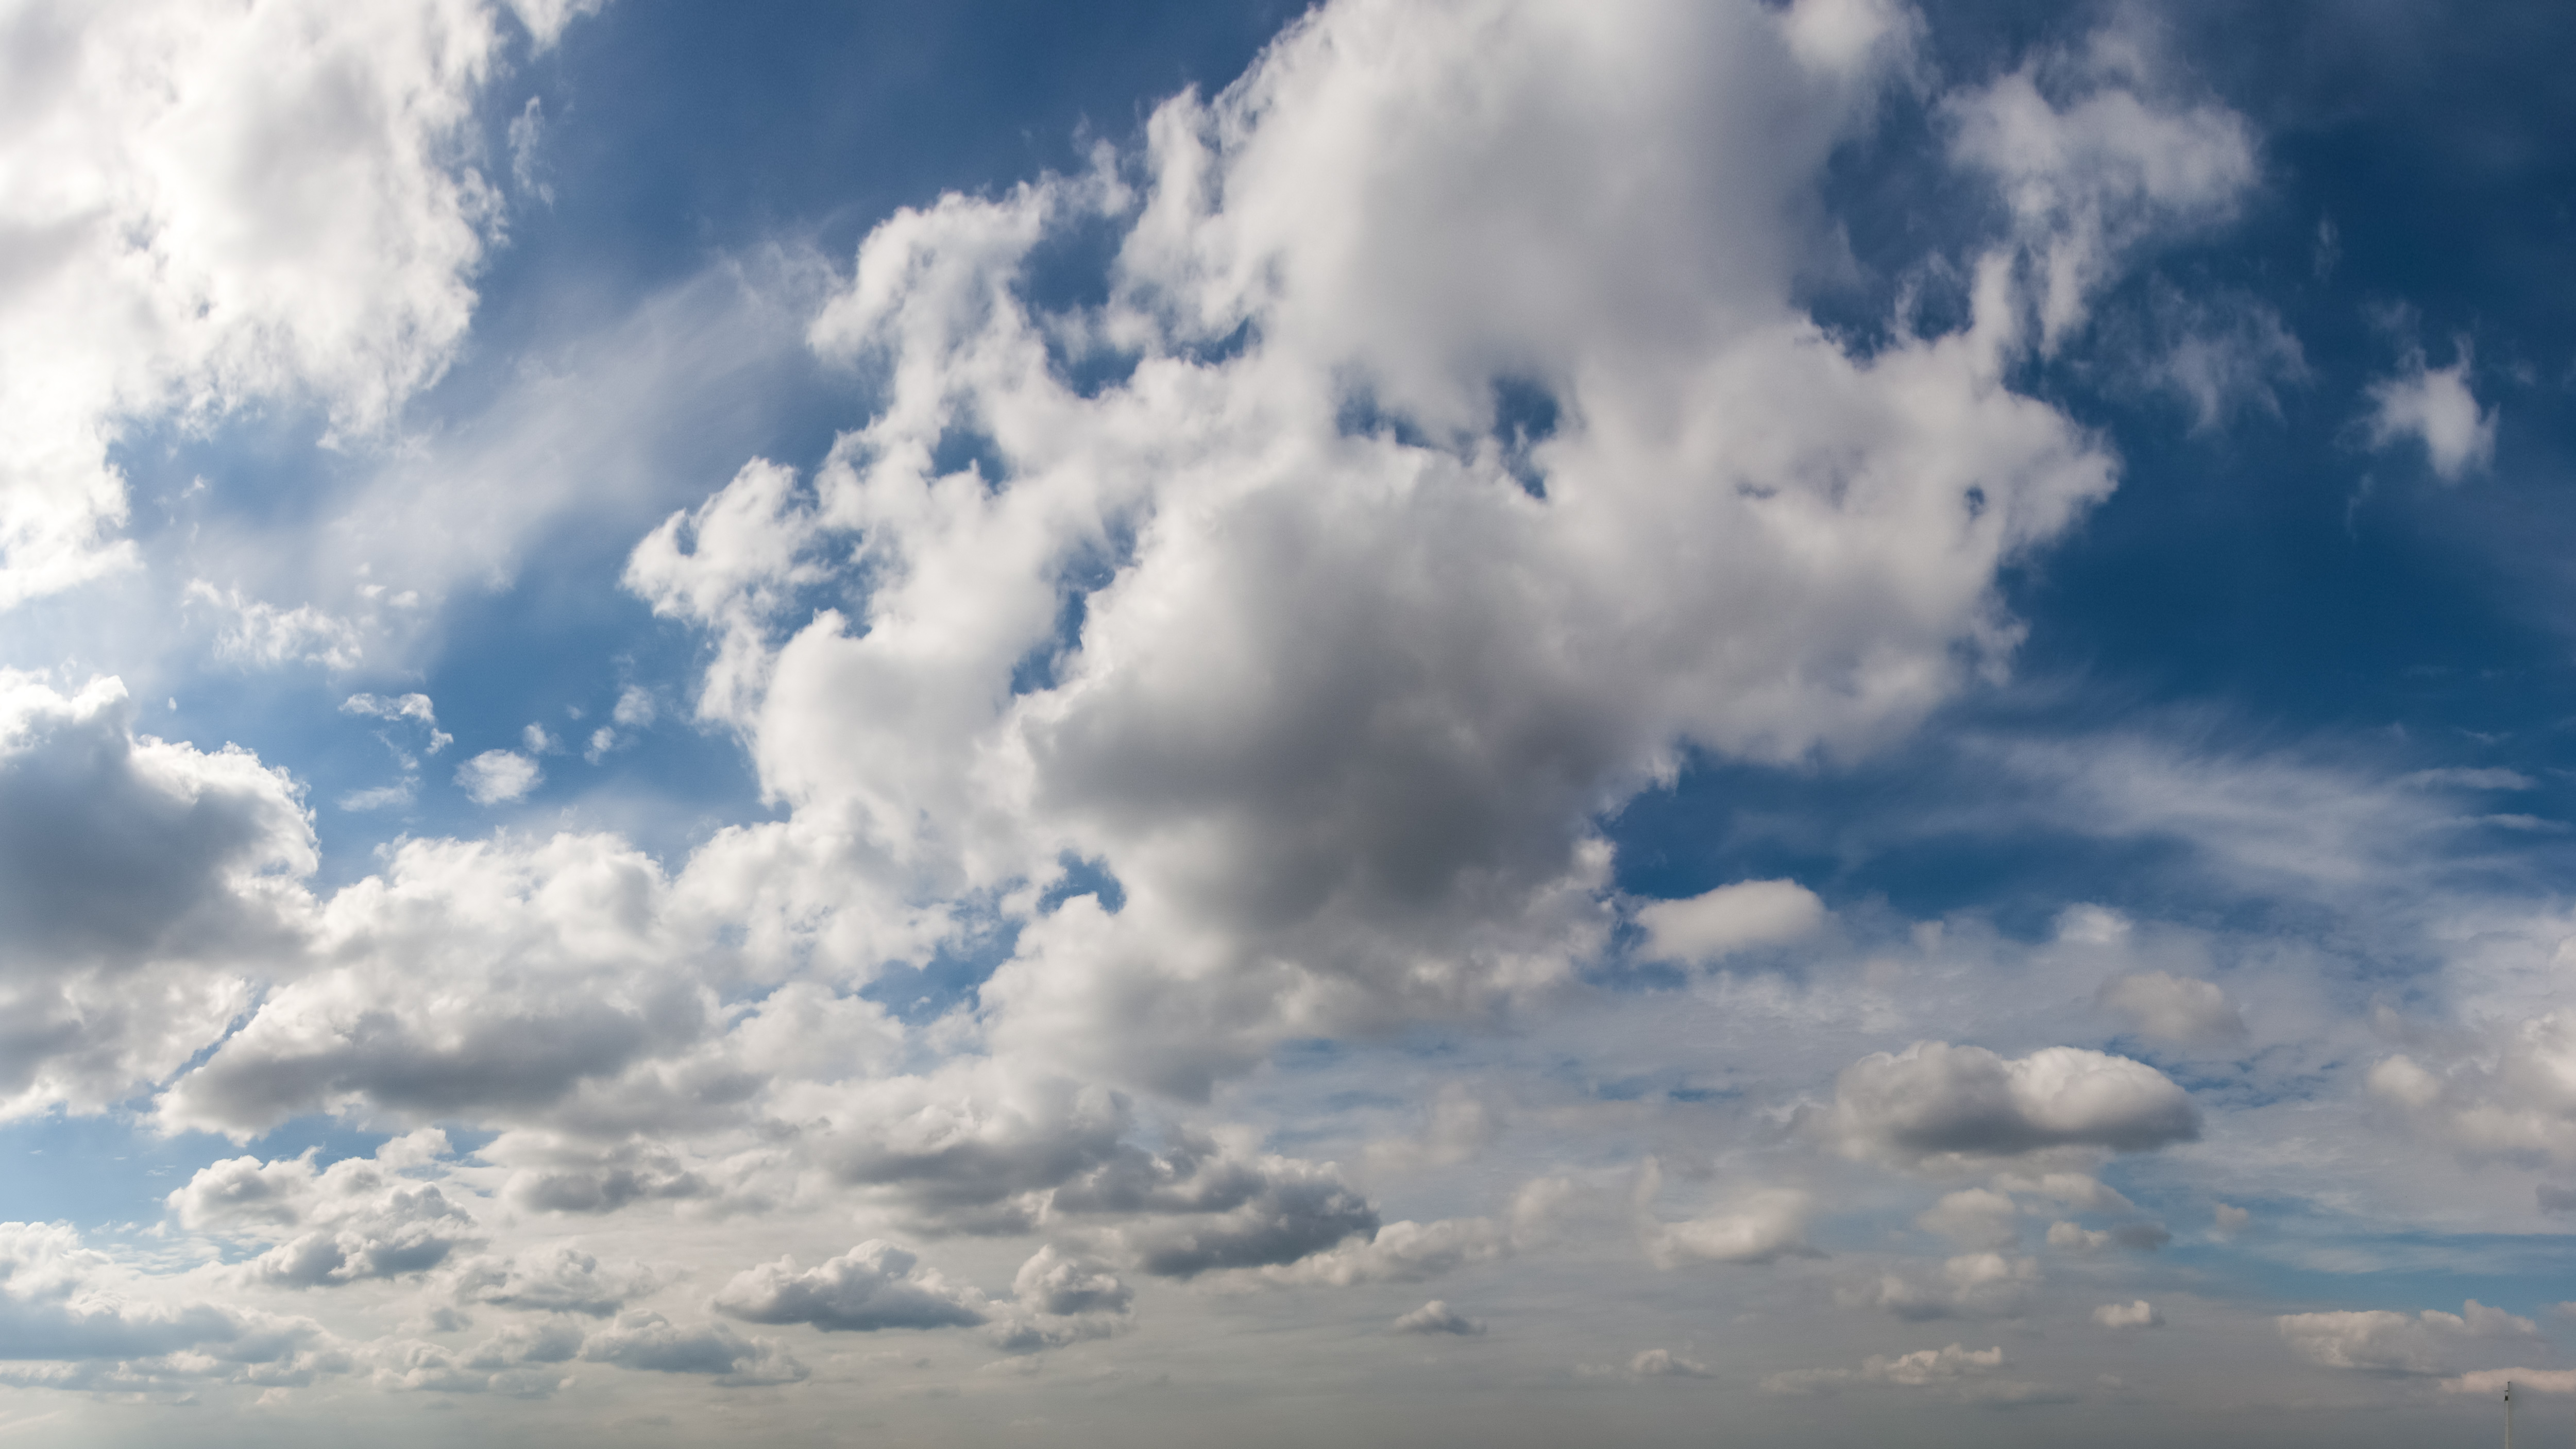 Valkirian skyes 1.20 1. Небо панорама. Небо для визуализации. Небо текстура бесшовная. Небо текстура 3д Макс.